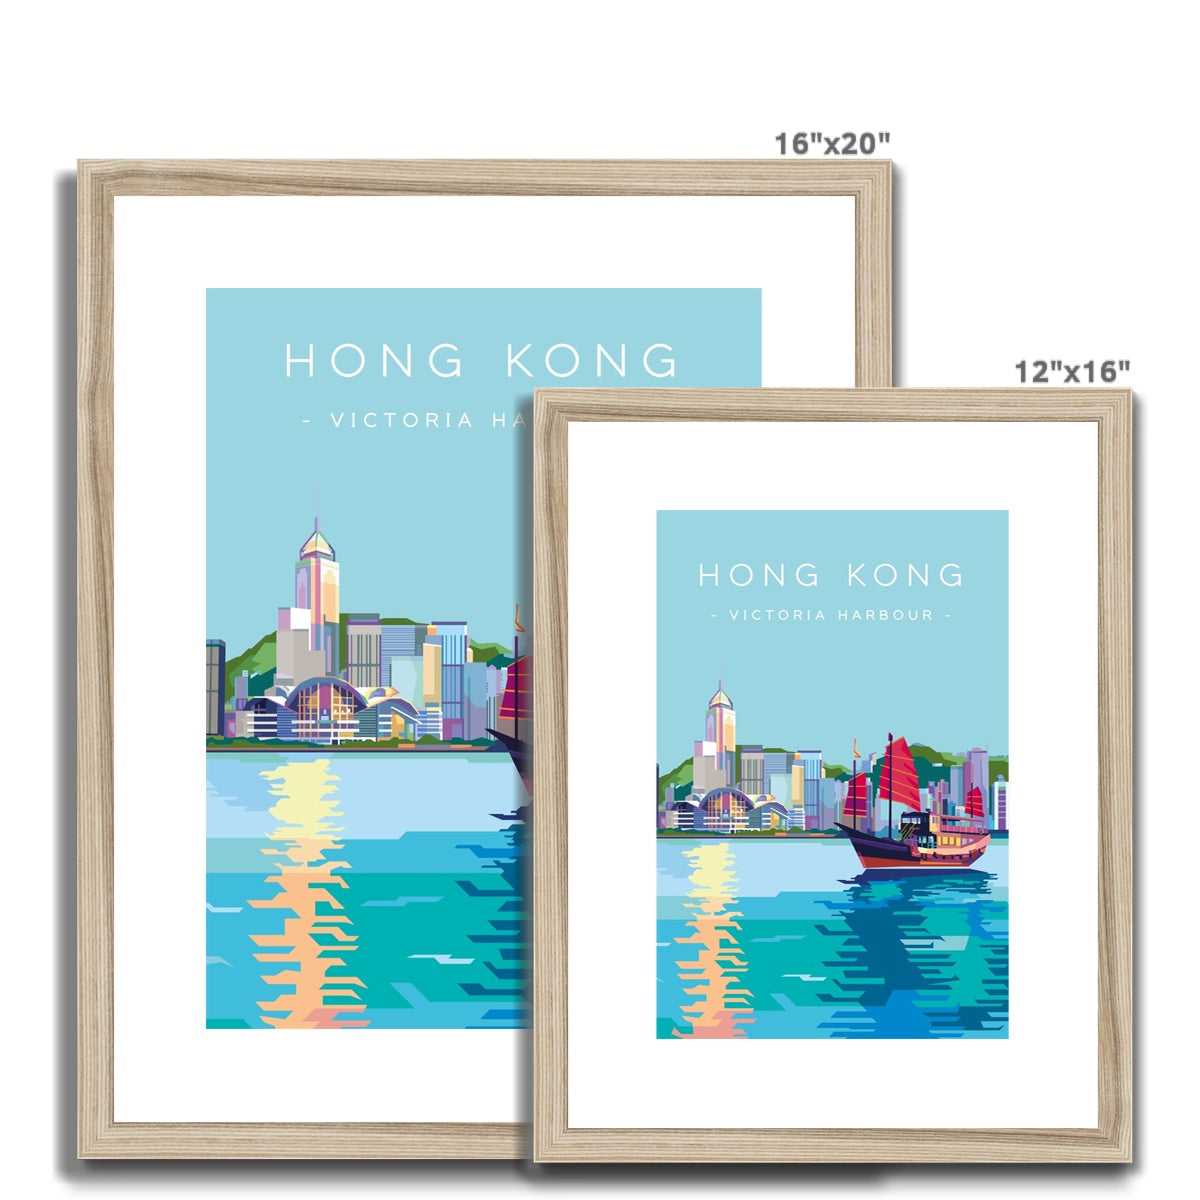 Hong Kong Travel - Victoria Harbour Aqua Luna Framed & Mounted Print